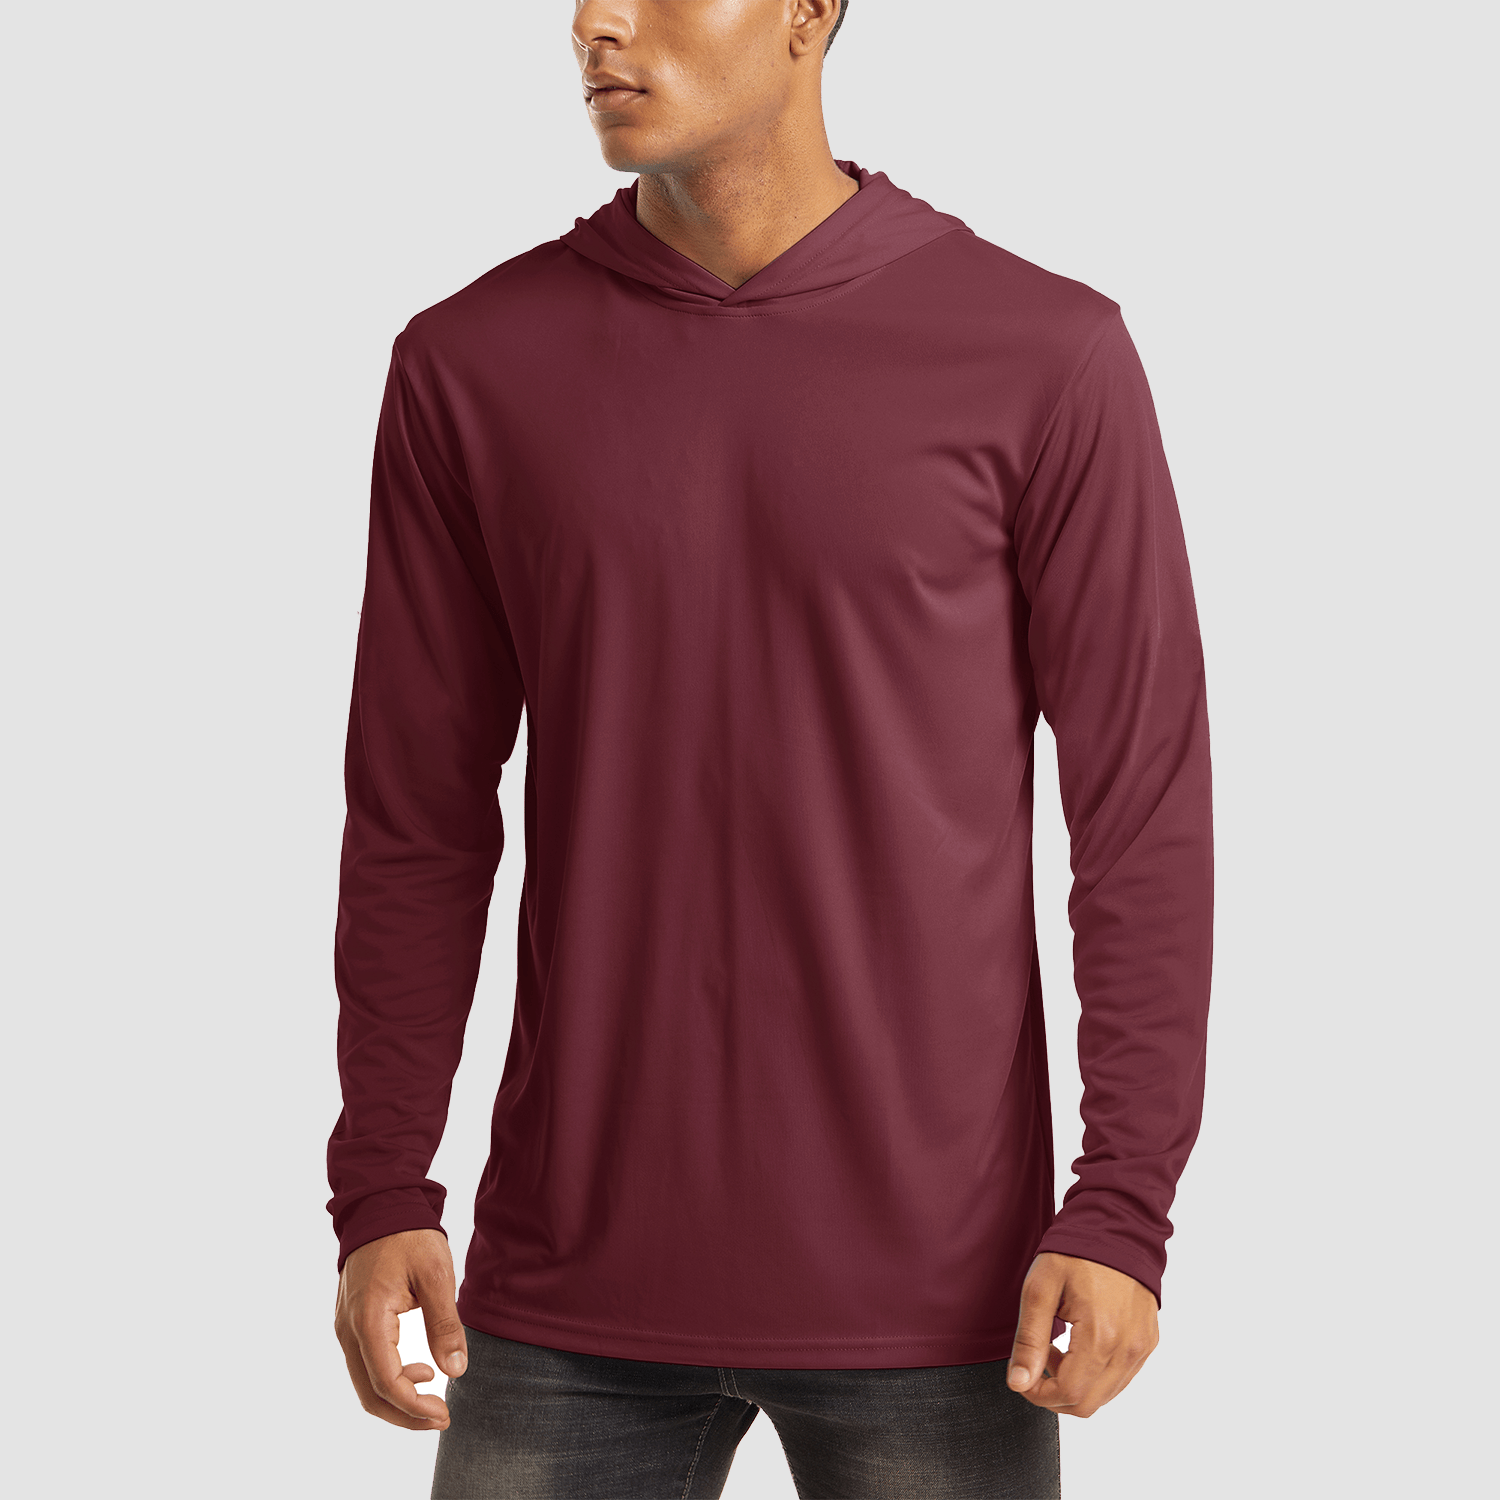 【Buy 4 Get 4th Free】Men's Long Sleeve Hooded Shirt UPF 50+ Athletic Shirts, Wine / L